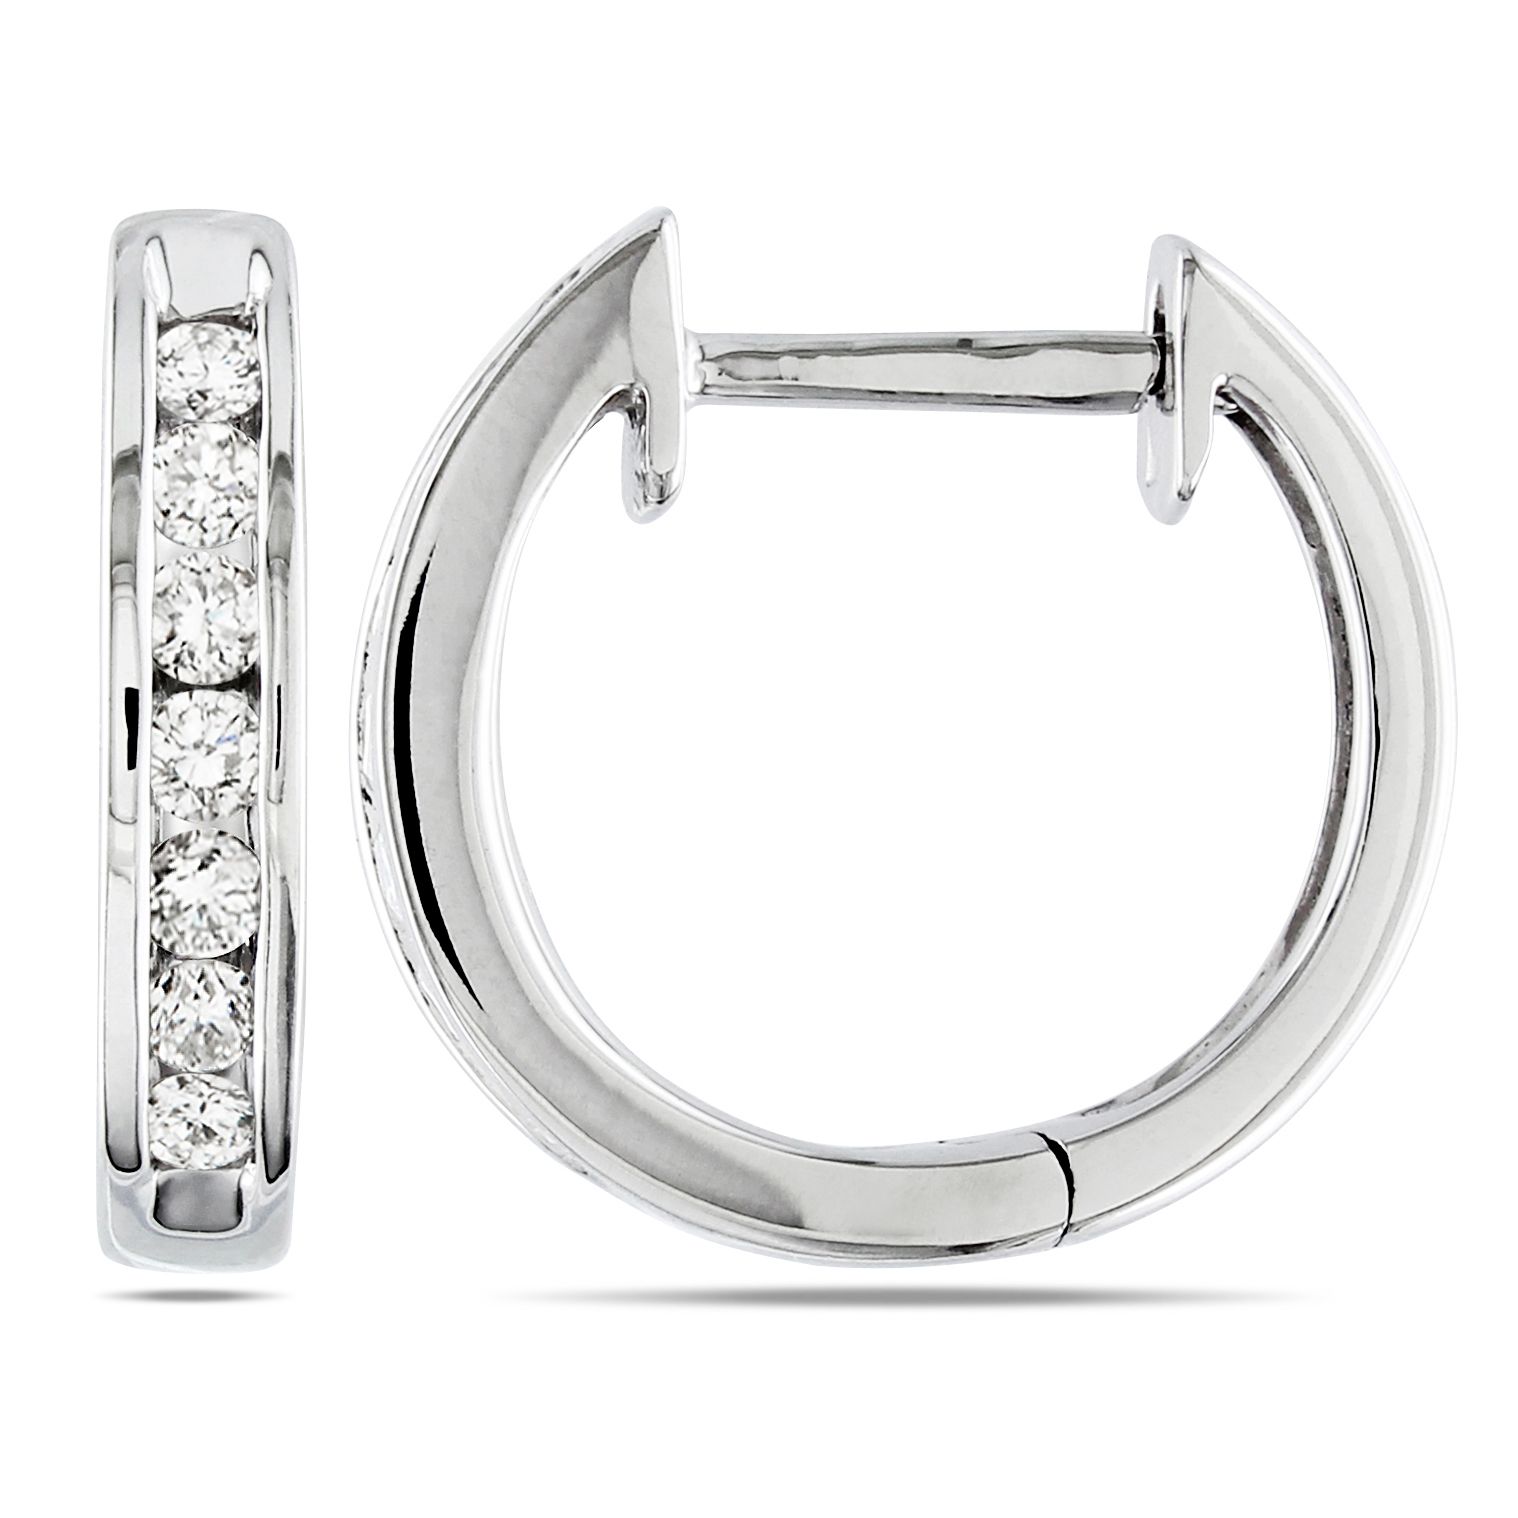 1/4 CT Diamond Cuff Earrings Set in 10k White Gold (GH I2;I3)